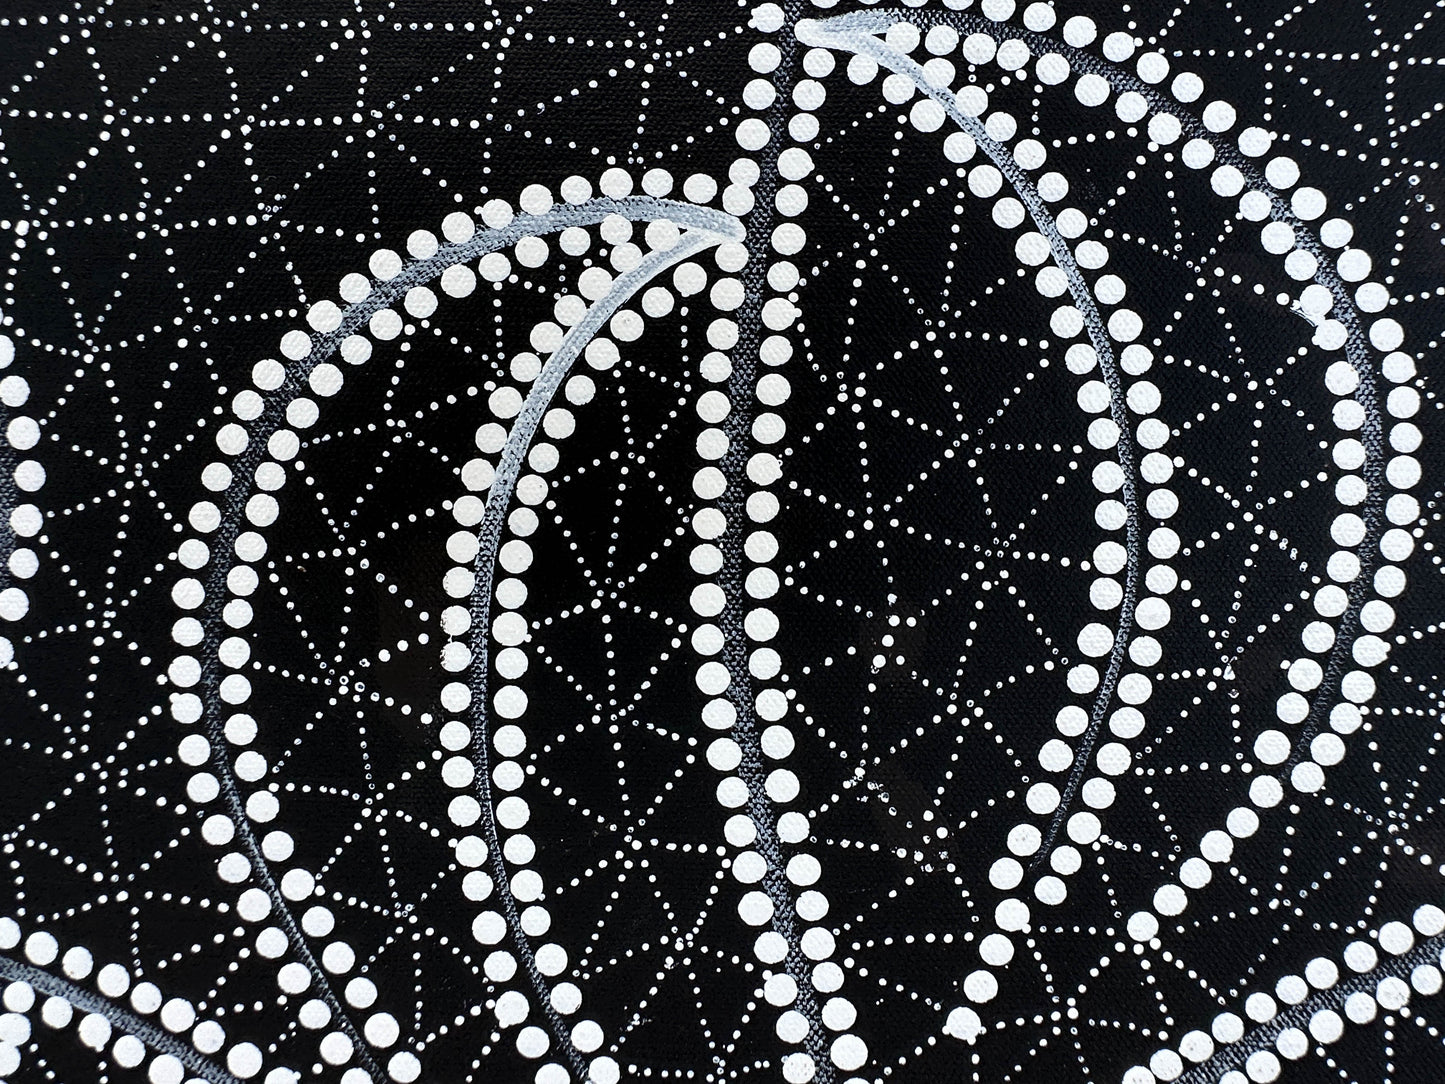 DOREEN DIXON (DICKSON) NAKAMARRA + NGURLU (DAMPER SEED DREAMING)+ Willowra + Wirliyajarrayi + Warlpiri + art for sale + painting for sale + artwork for sale + dot painting + dot art work + black and white + monochromatic + indigenous art + Aboriginal art + Australian art + traditional art + intricate art + unique artwork + darwin based gallery + family owned business + art collector + art story + home decor + interior designer + decor + black and white + monochromatic